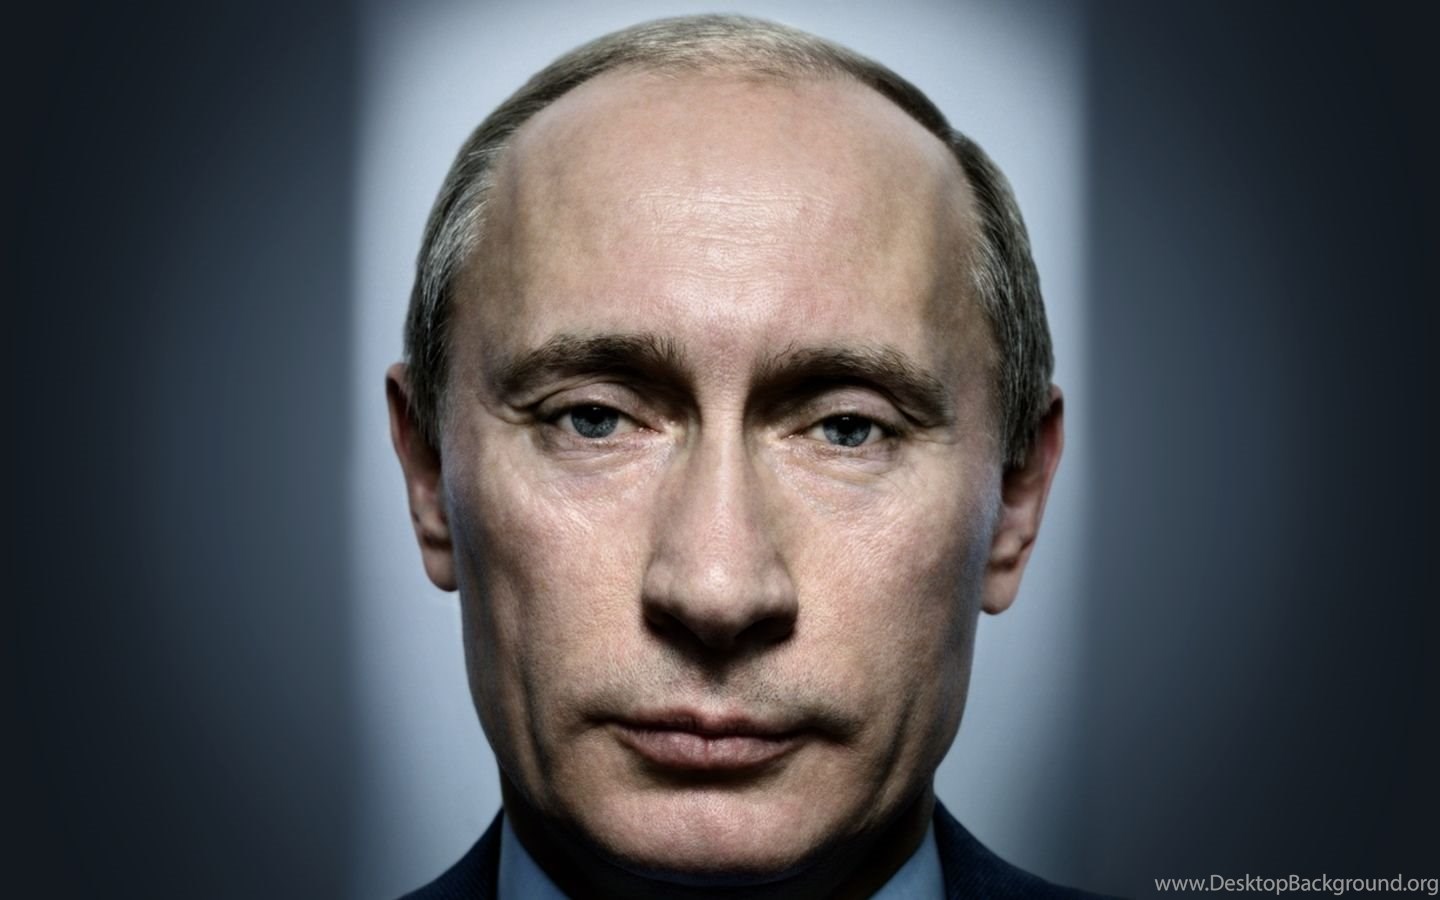 Vladimir Putin Wallpapers Hd Wallpaper Backgrounds Of Your Choice Desktop Background